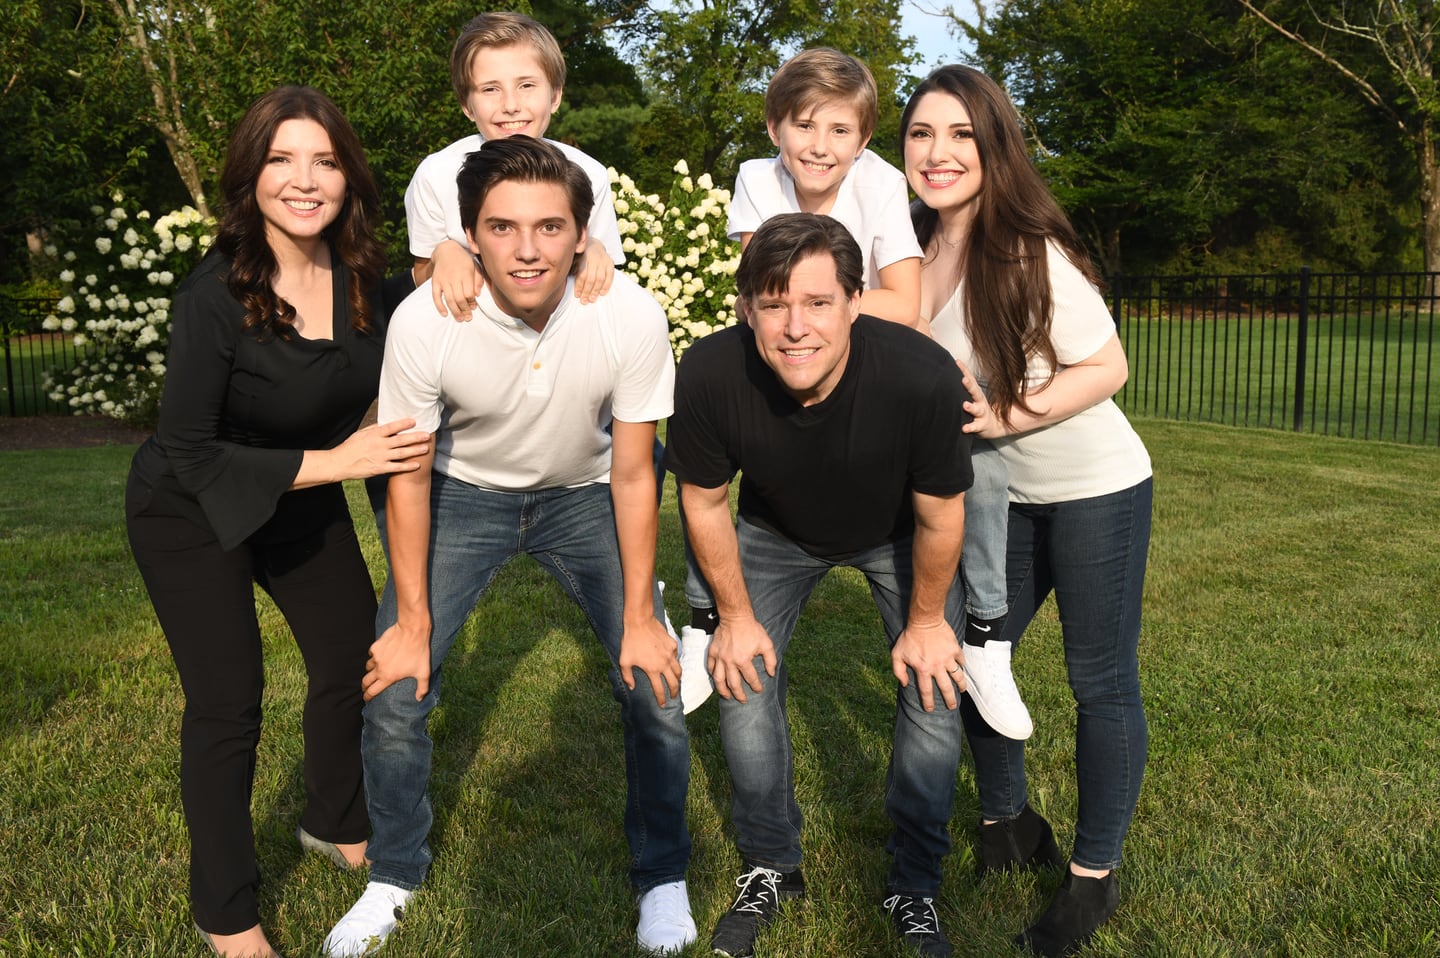 The Sharpe family Barbra, Aidan, Connor, Logan, Ron and Samantha.